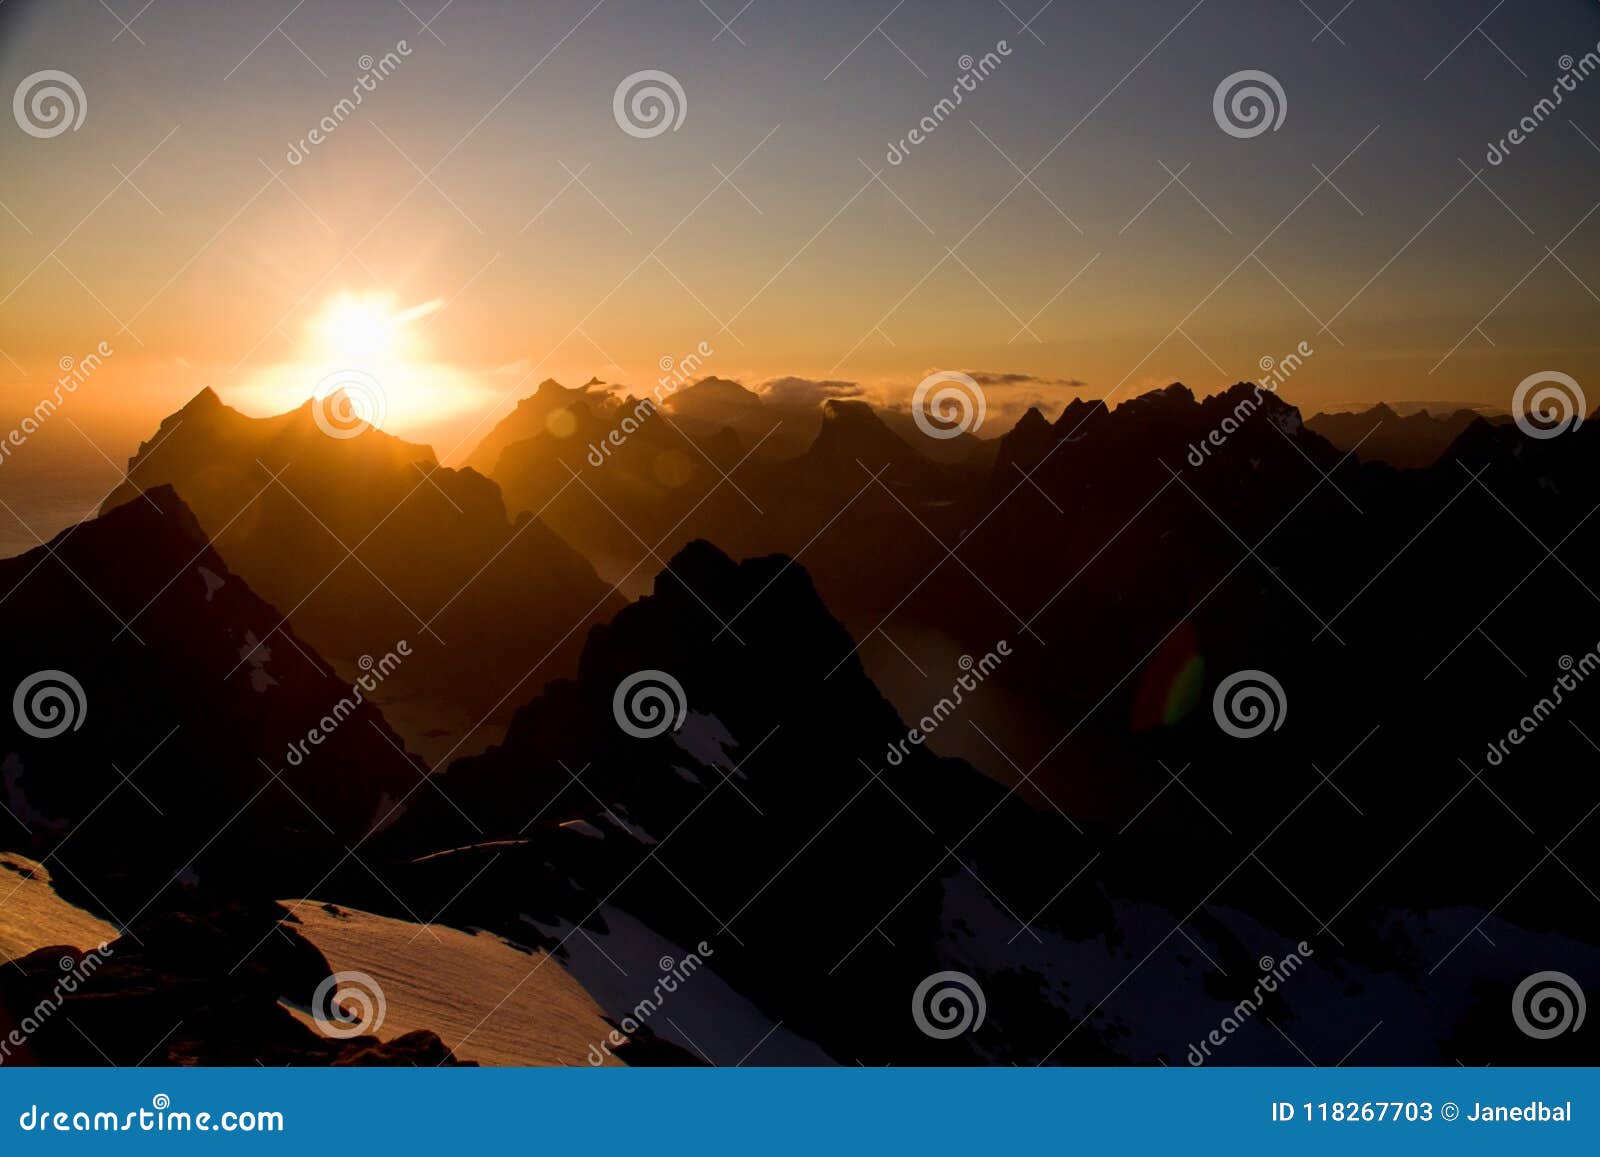 true lofoten midnight sun over sharp mountains of moskenesoya and fjords, seen from munken peak summit, norway